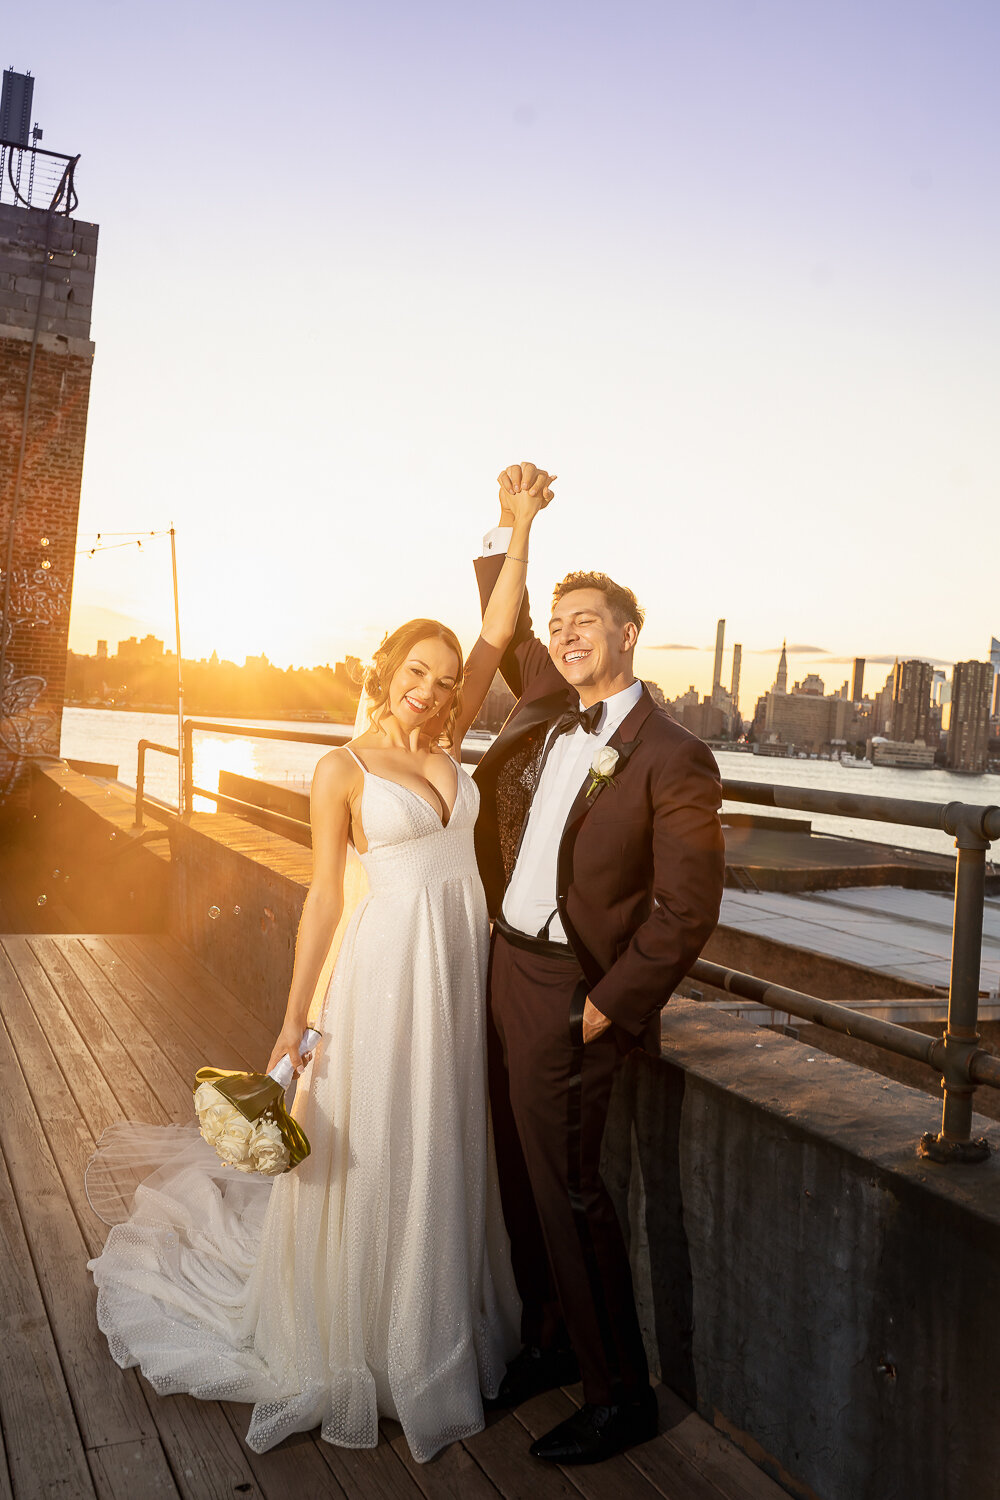 Greenpoint-lofts-brooklyn-newyork-rustic-wedding-26.jpg